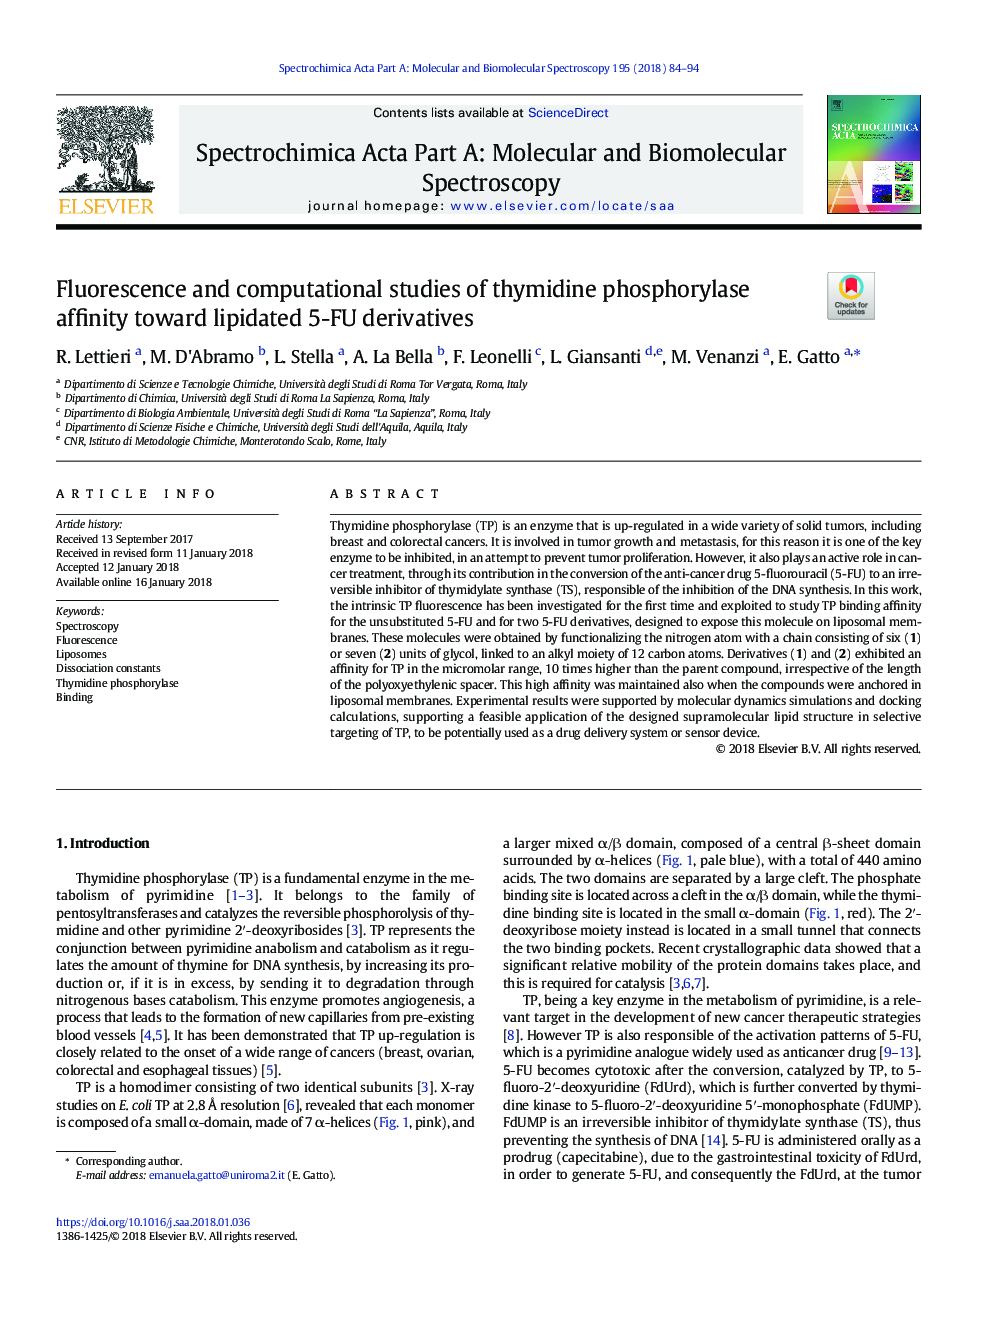 Fluorescence and computational studies of thymidine phosphorylase affinity toward lipidated 5-FU derivatives